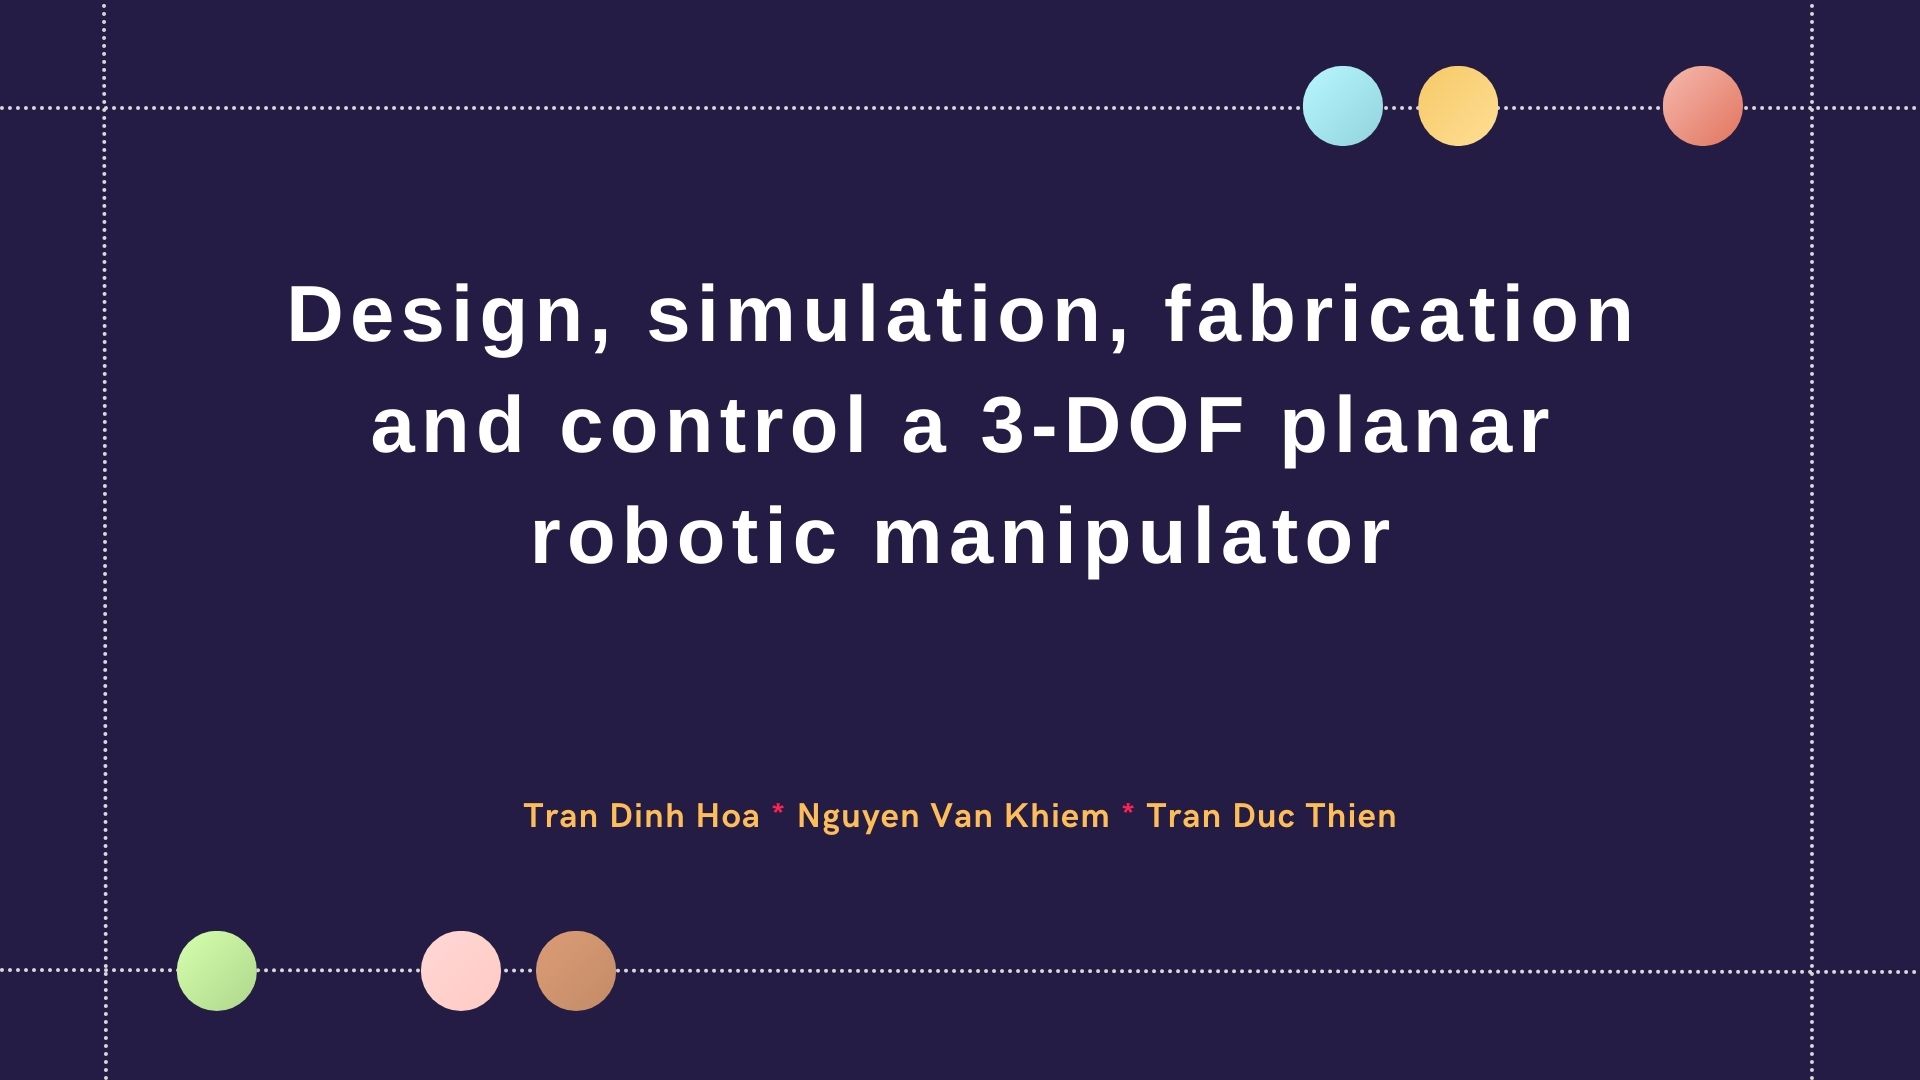 Design, simulation, fabrication and control a 3-DOF planar robotic manipulator